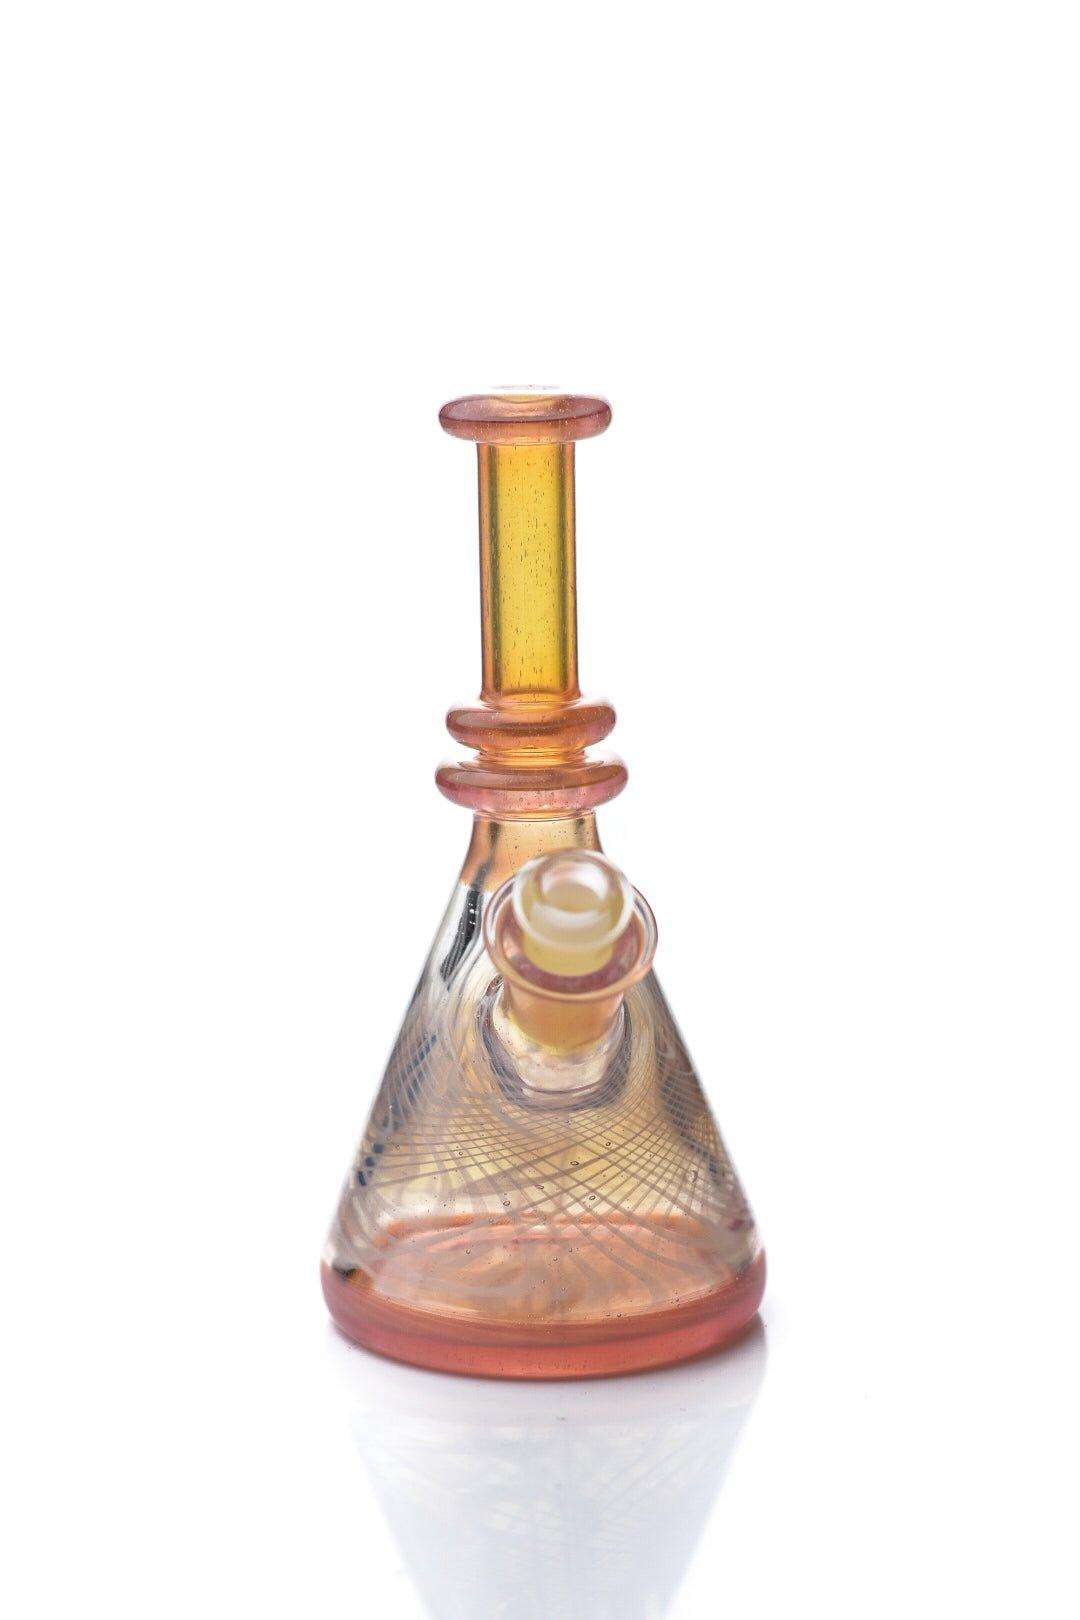 ET Glass Pink To Yellow Serum Rig - Smoke Spot Smoke Shop